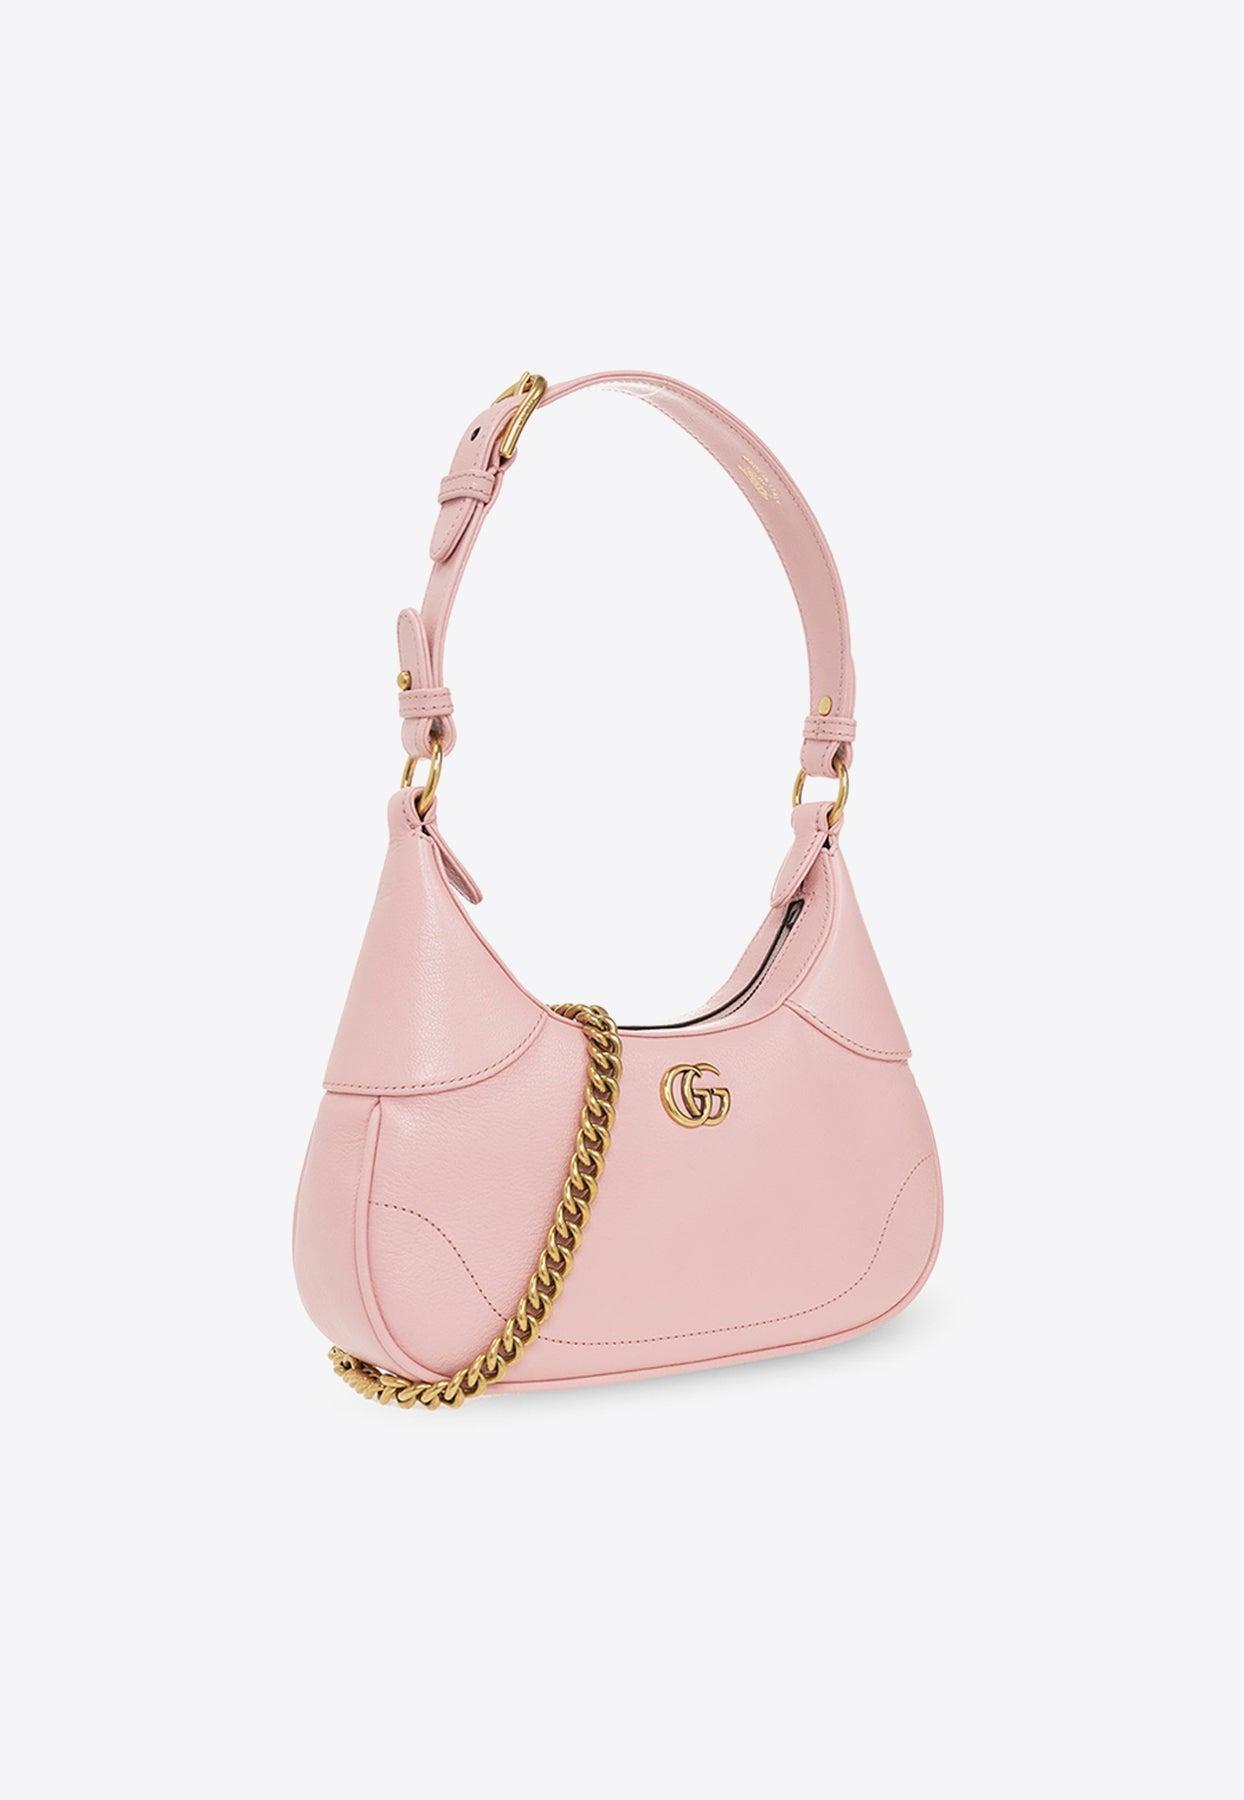 Gucci Chain Link Nylon Shoulder Bag